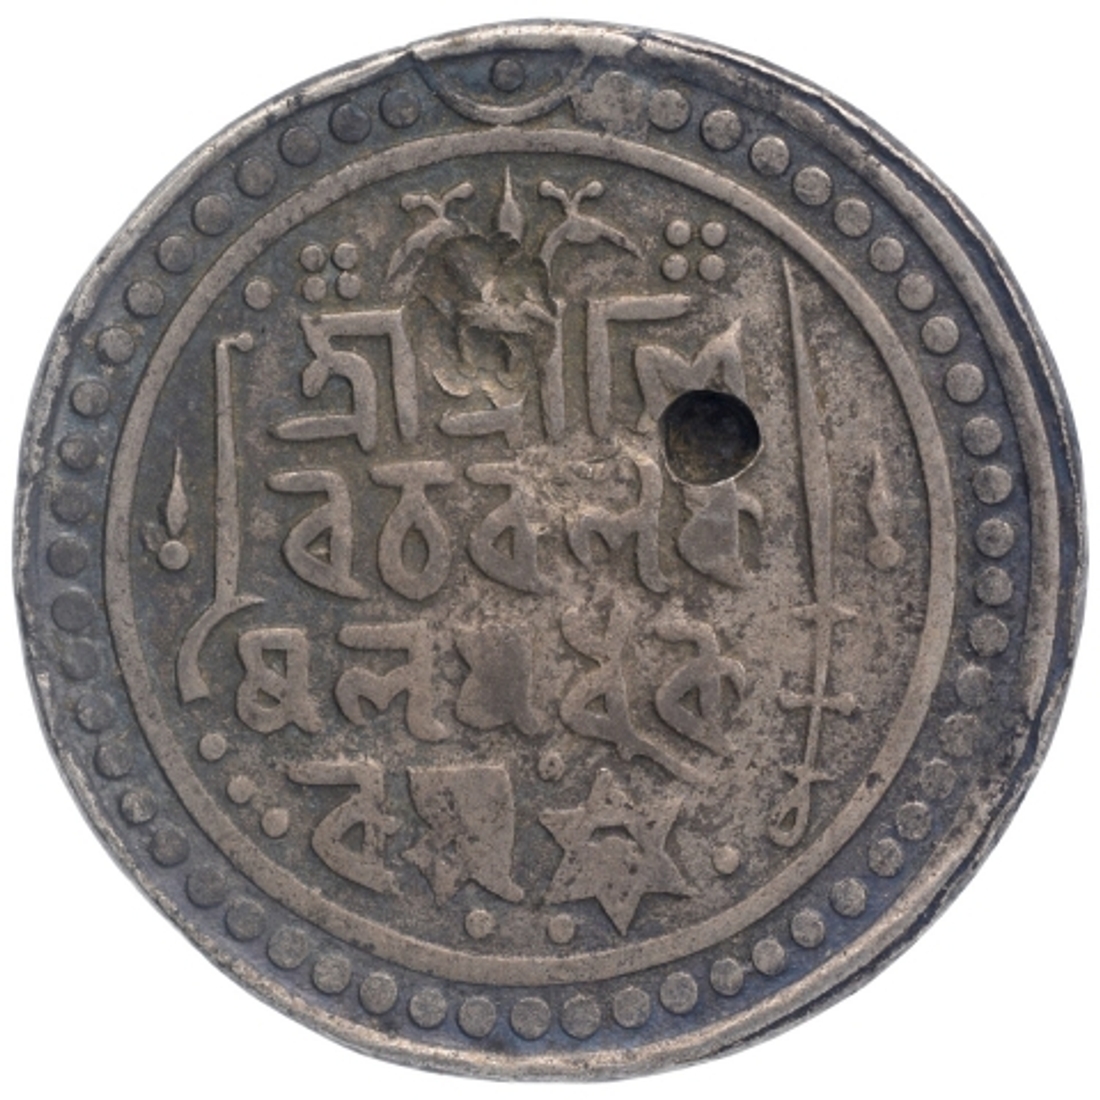 Silver Tanka Coin of Bar Gossain II of Jaintiapur Kingdom.